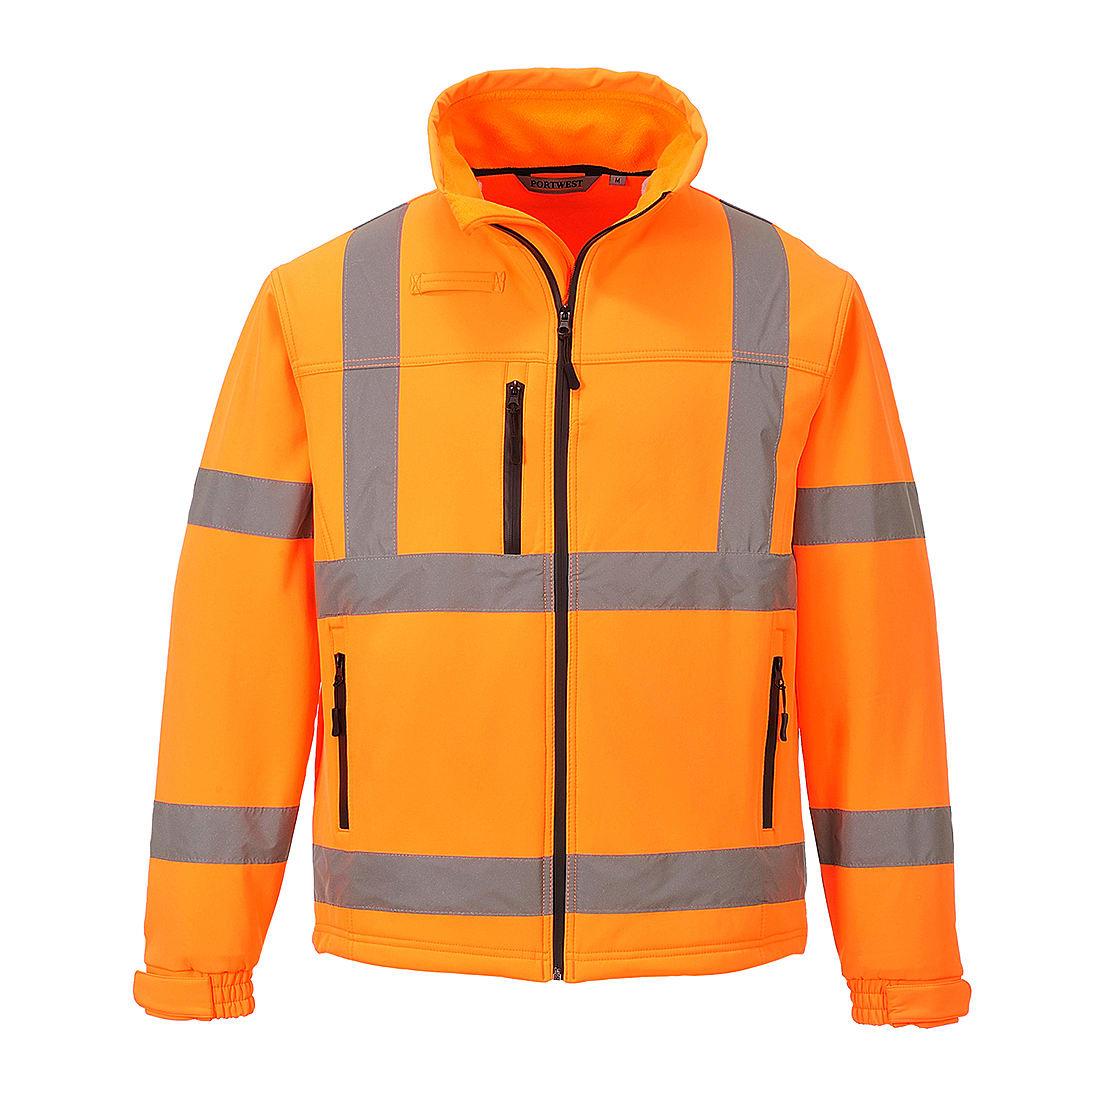 Portwest Hi-Viz Classic Softshell Jacket (3L) in Orange (Product Code: S424)